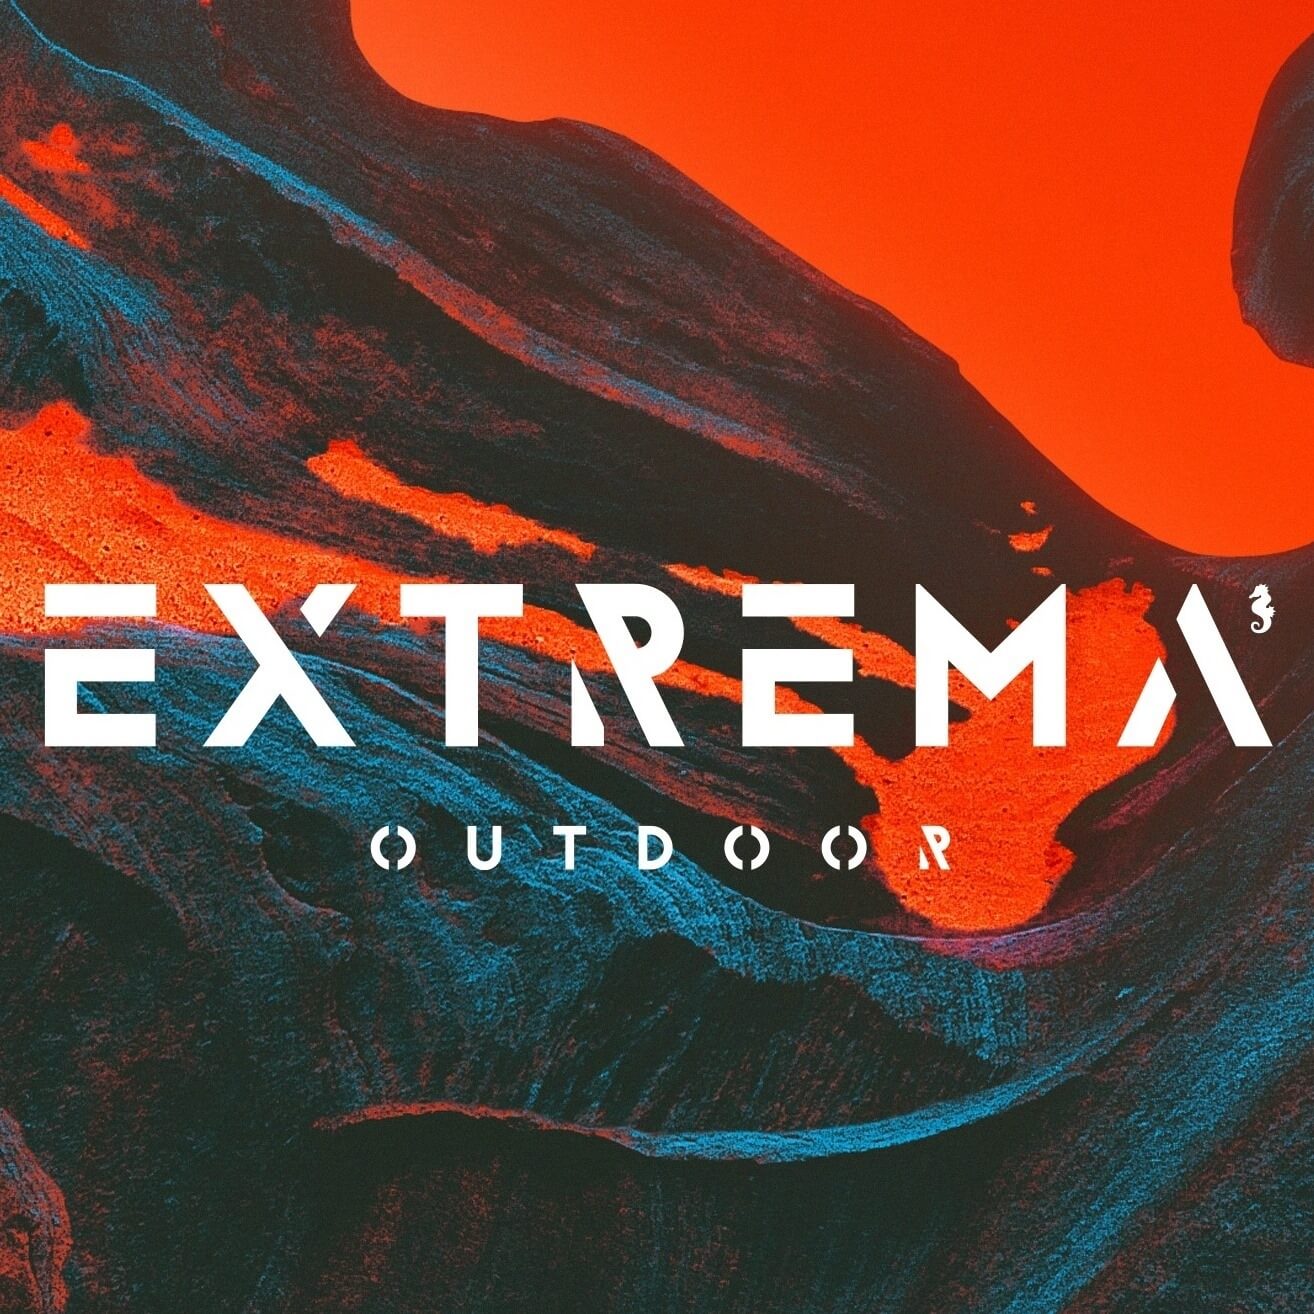 extrema outdoor